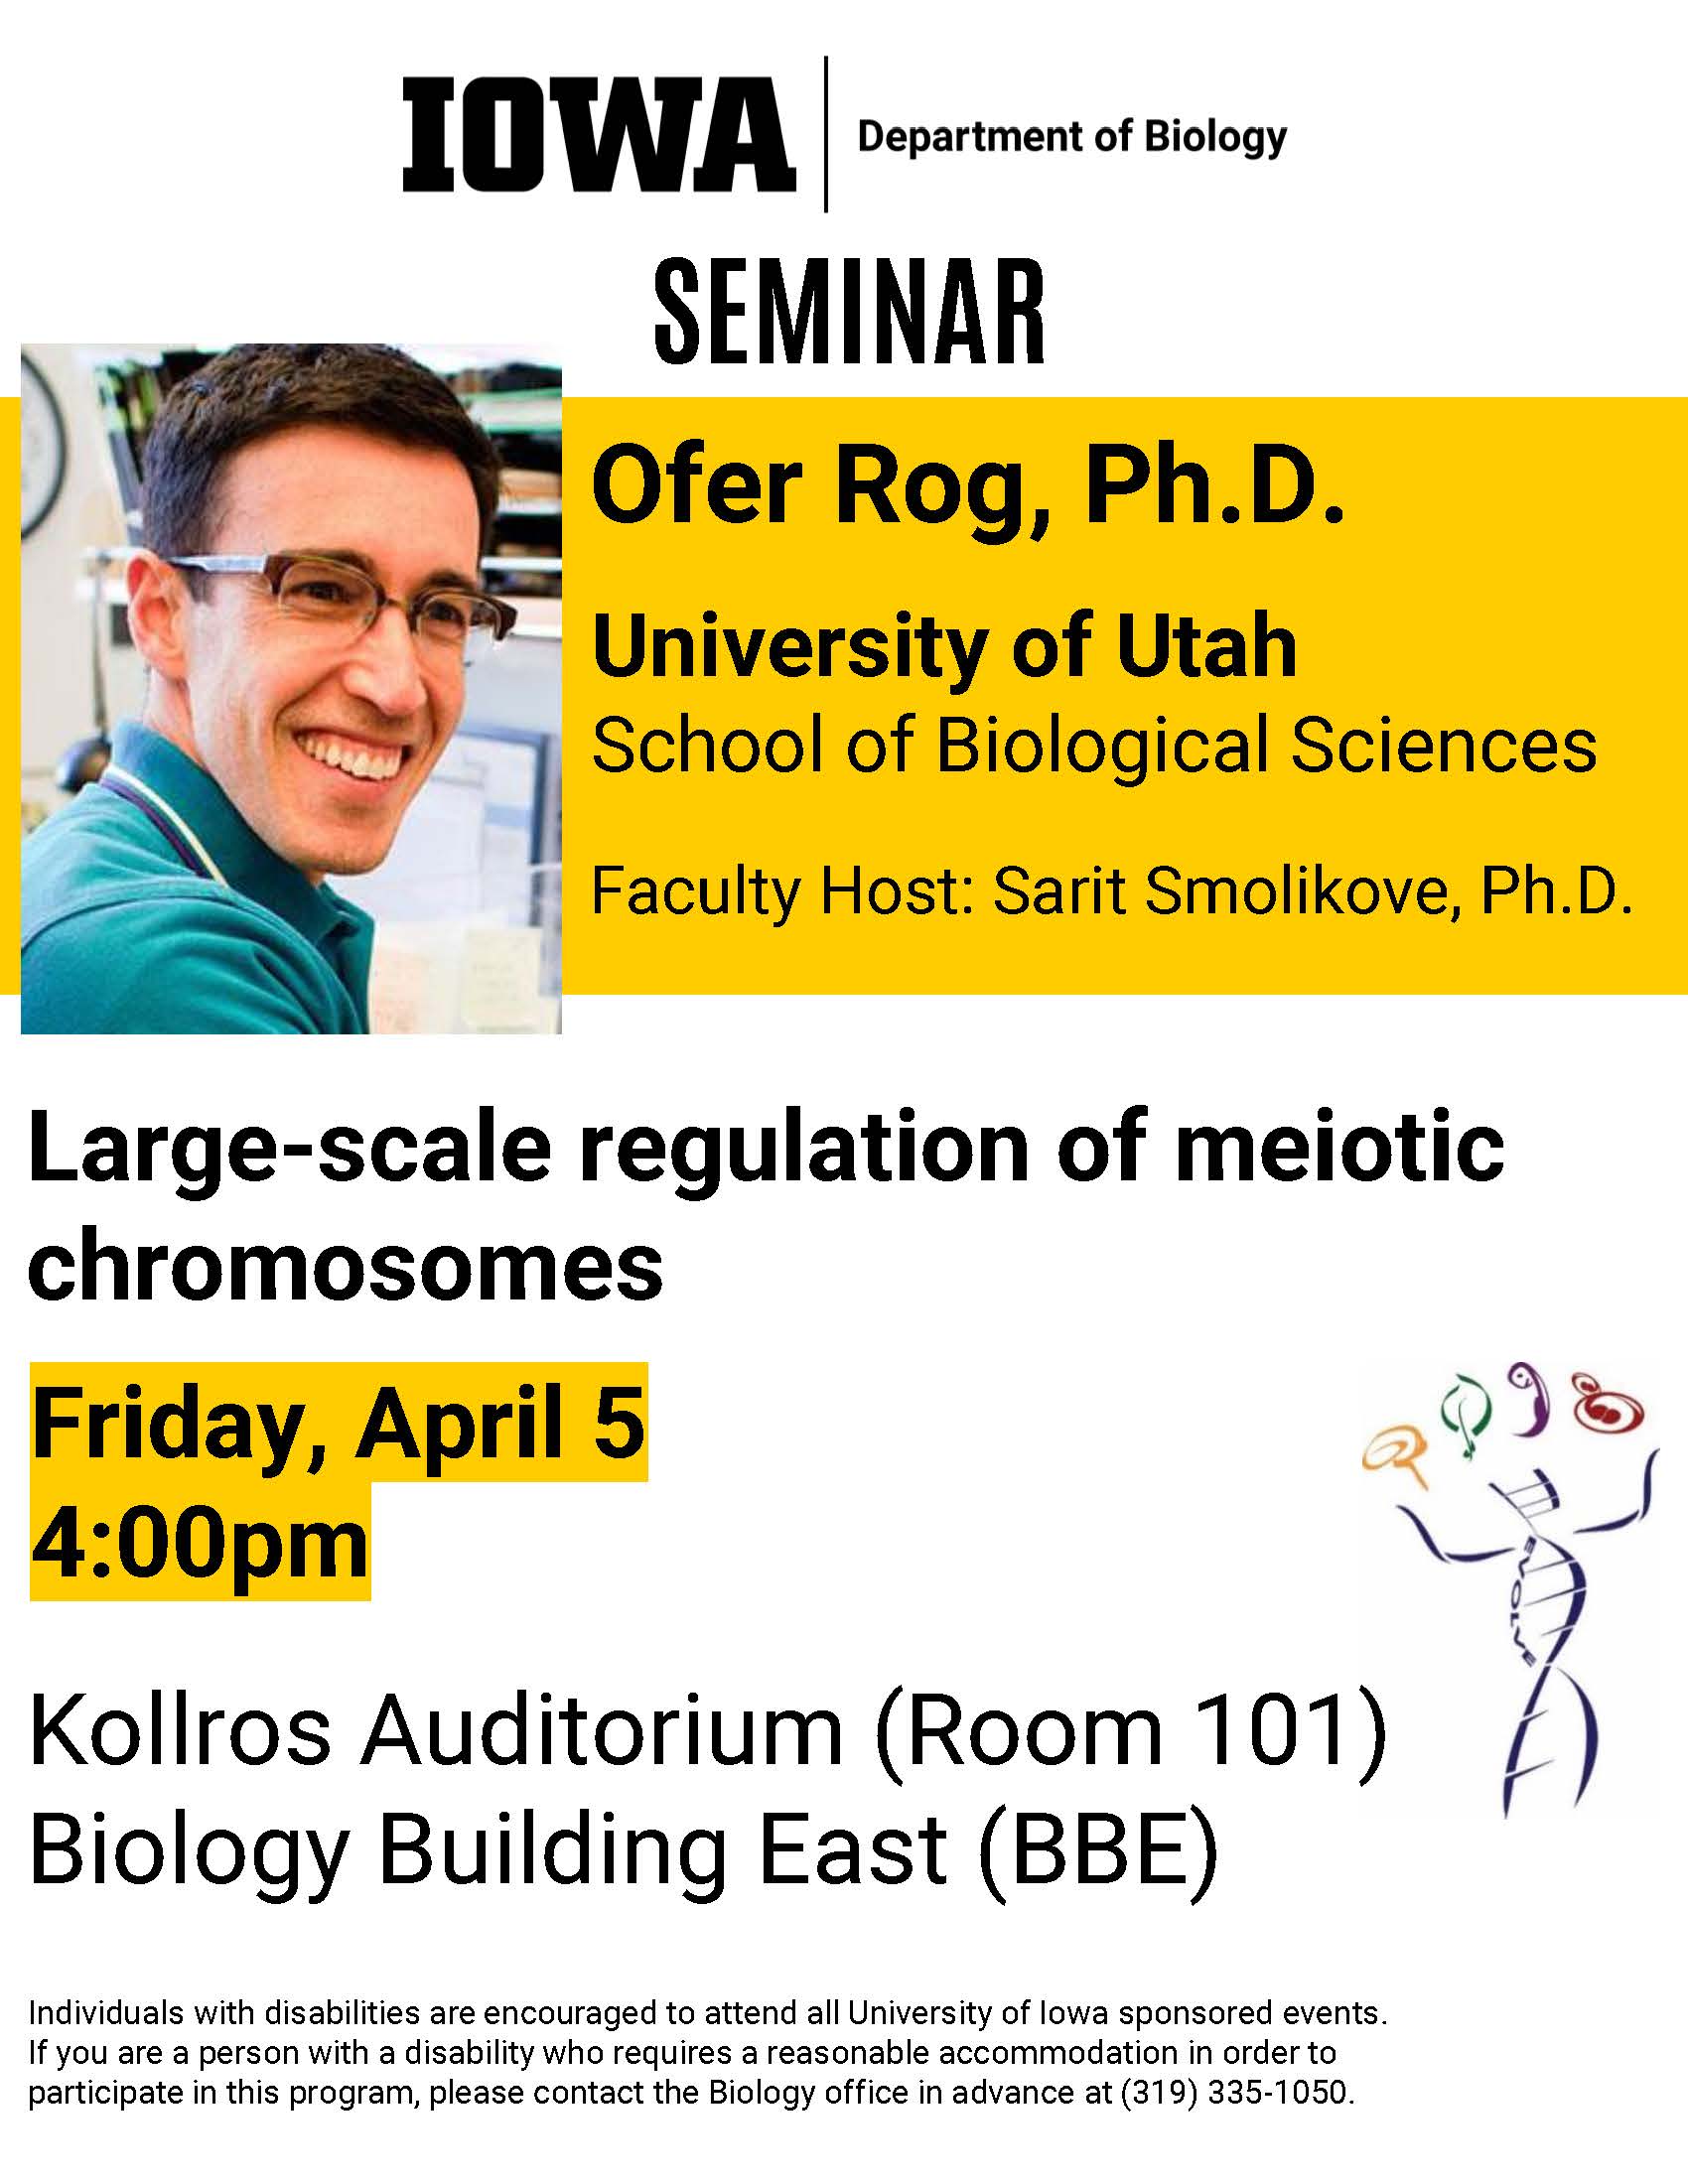 Biology Seminar: "Large-scale regulation of meiotic chromosomes" promotional image